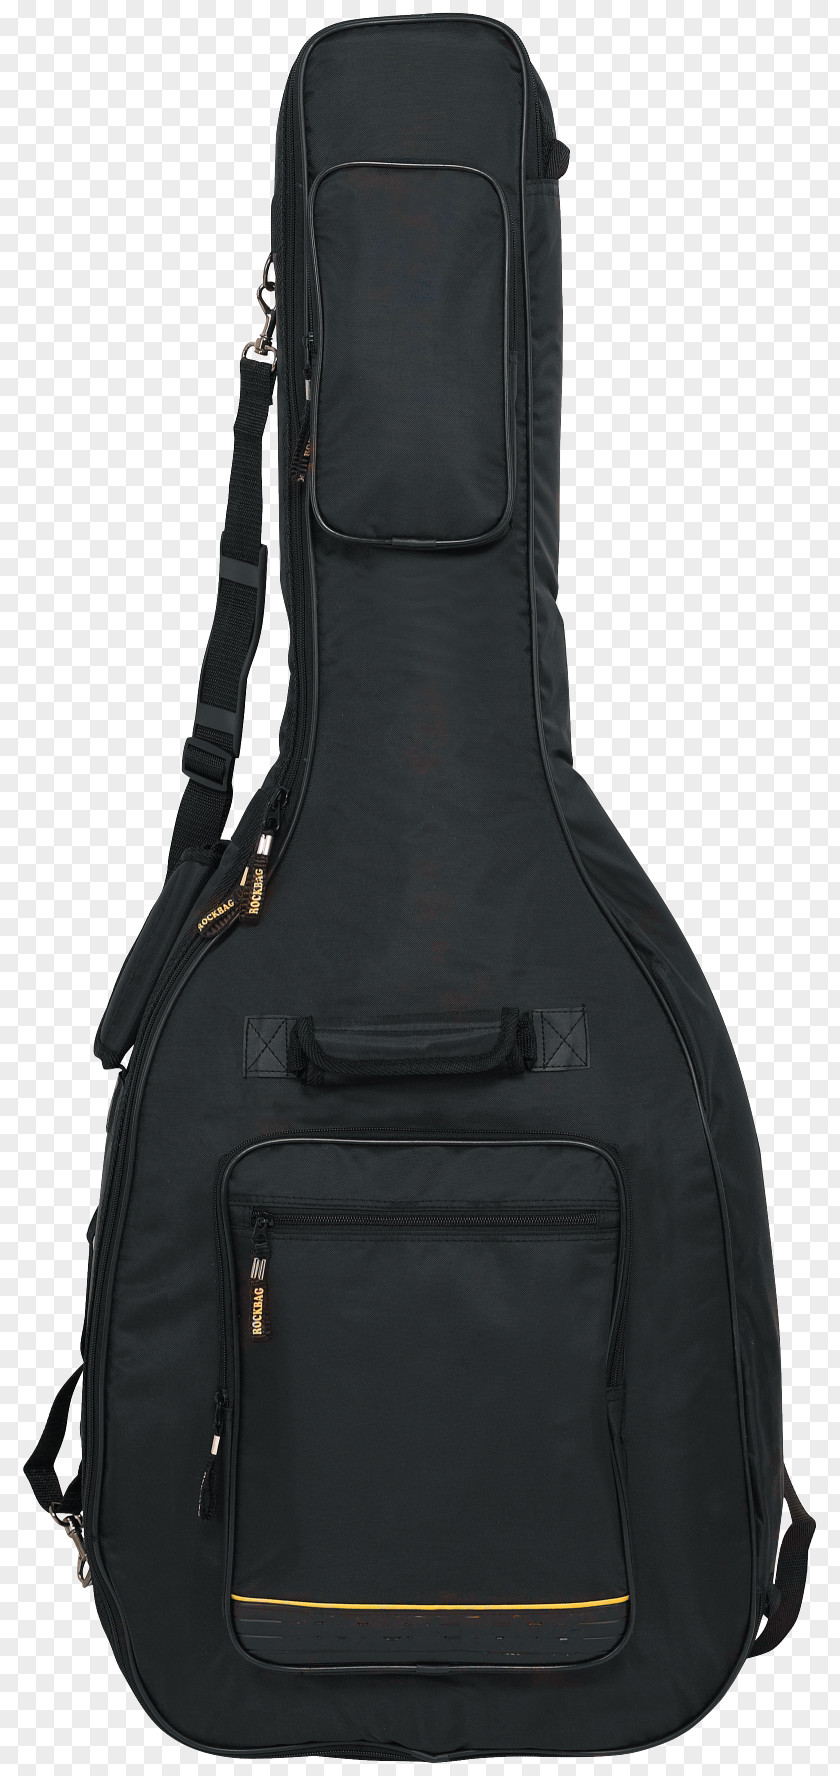 Acoustic Guitar Gig Bag Steel-string Musical Instruments PNG